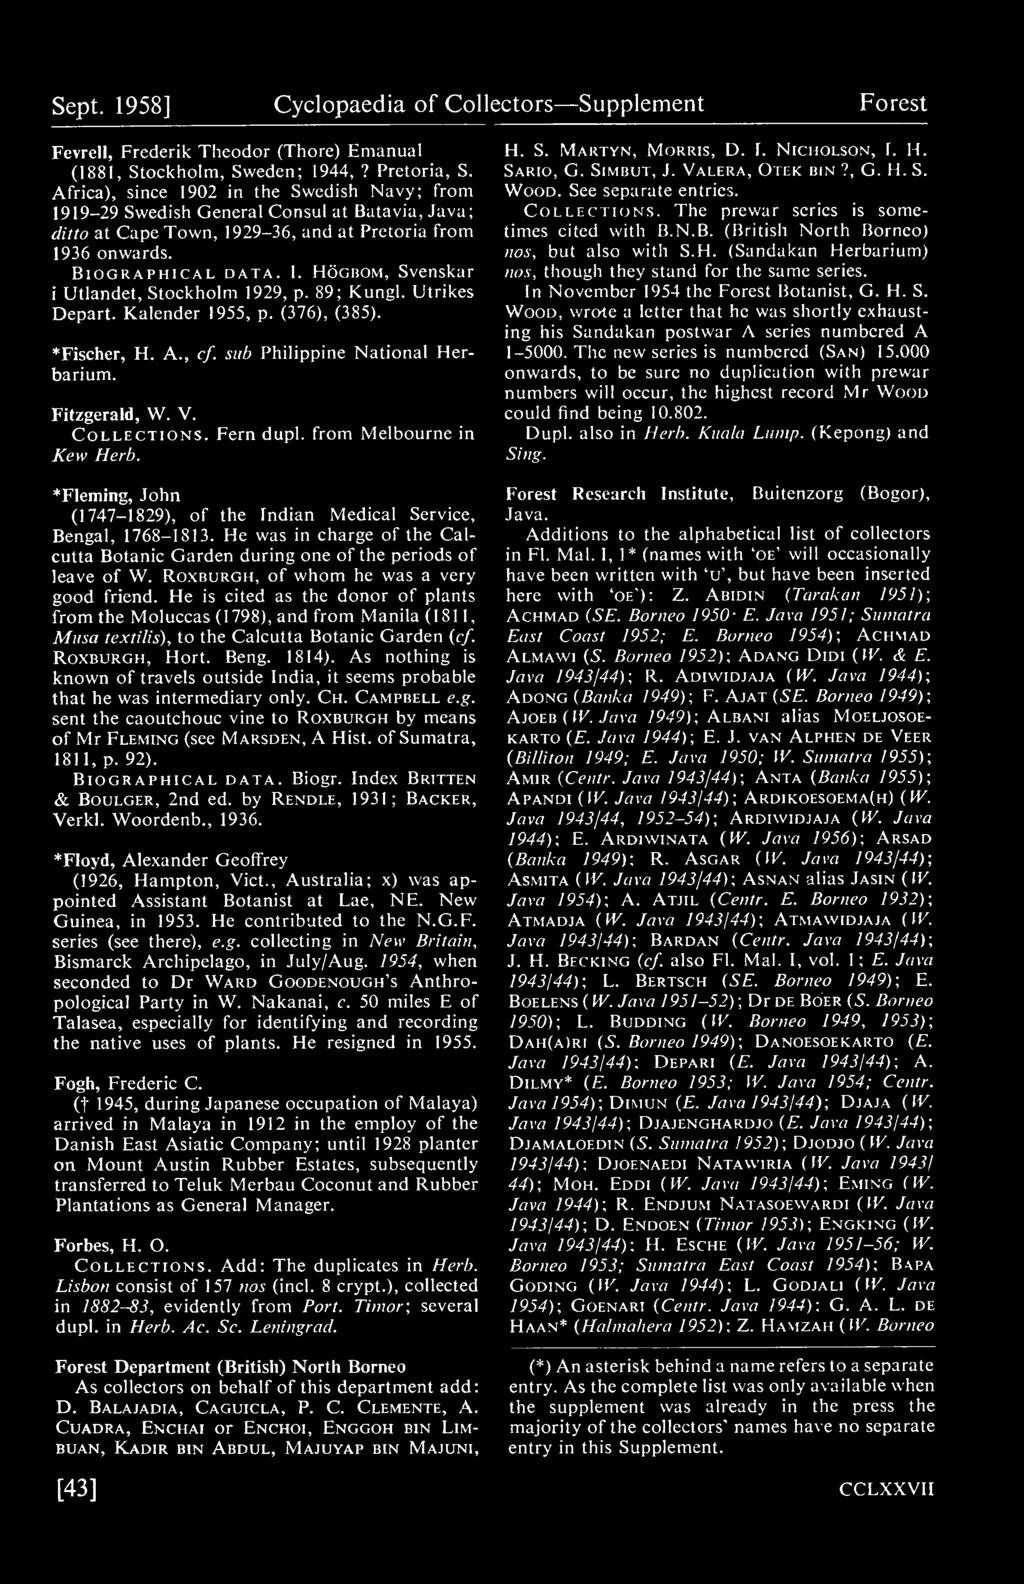 Hogbom, Svenskar i Utlandet, Stockholm 1929, p. 89; Kungl. Utrikes Depart. Kalender 1955, p. (376), (385). Fischer, H. A., cf. sub Philippine National Herbarium. Fitzgerald, W. V. Collections.